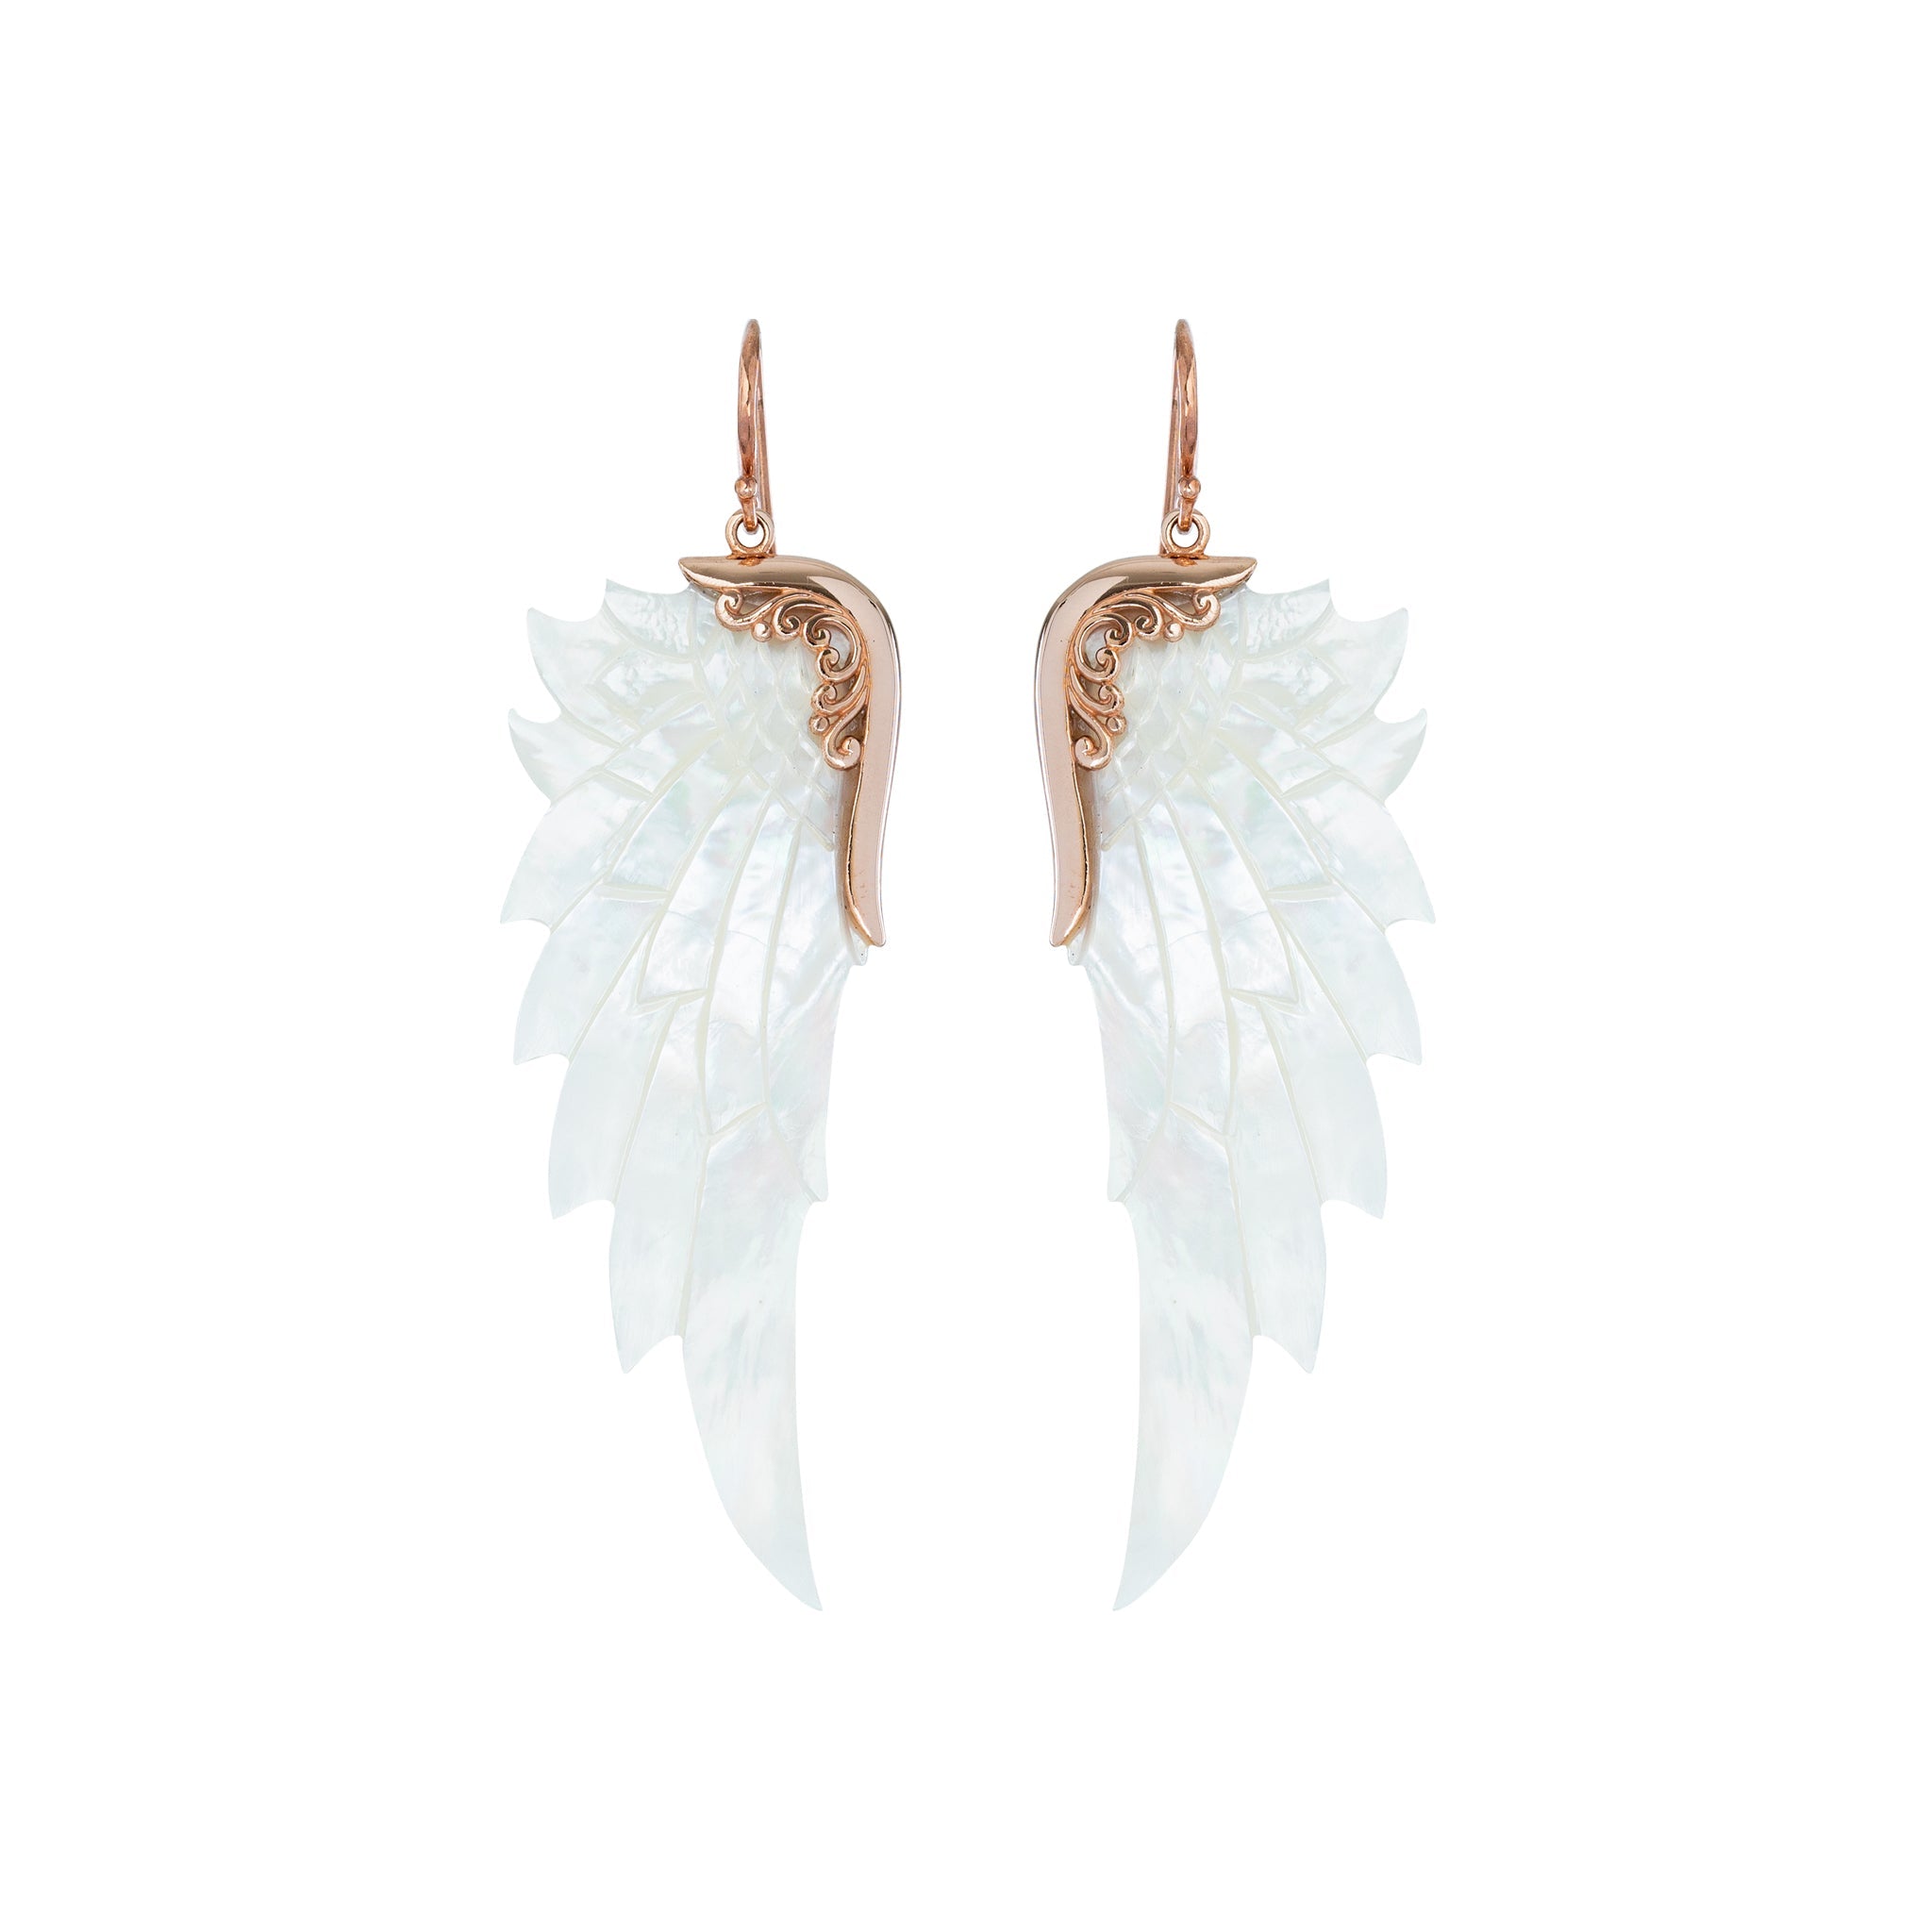 Large rose gold angel wing earrings